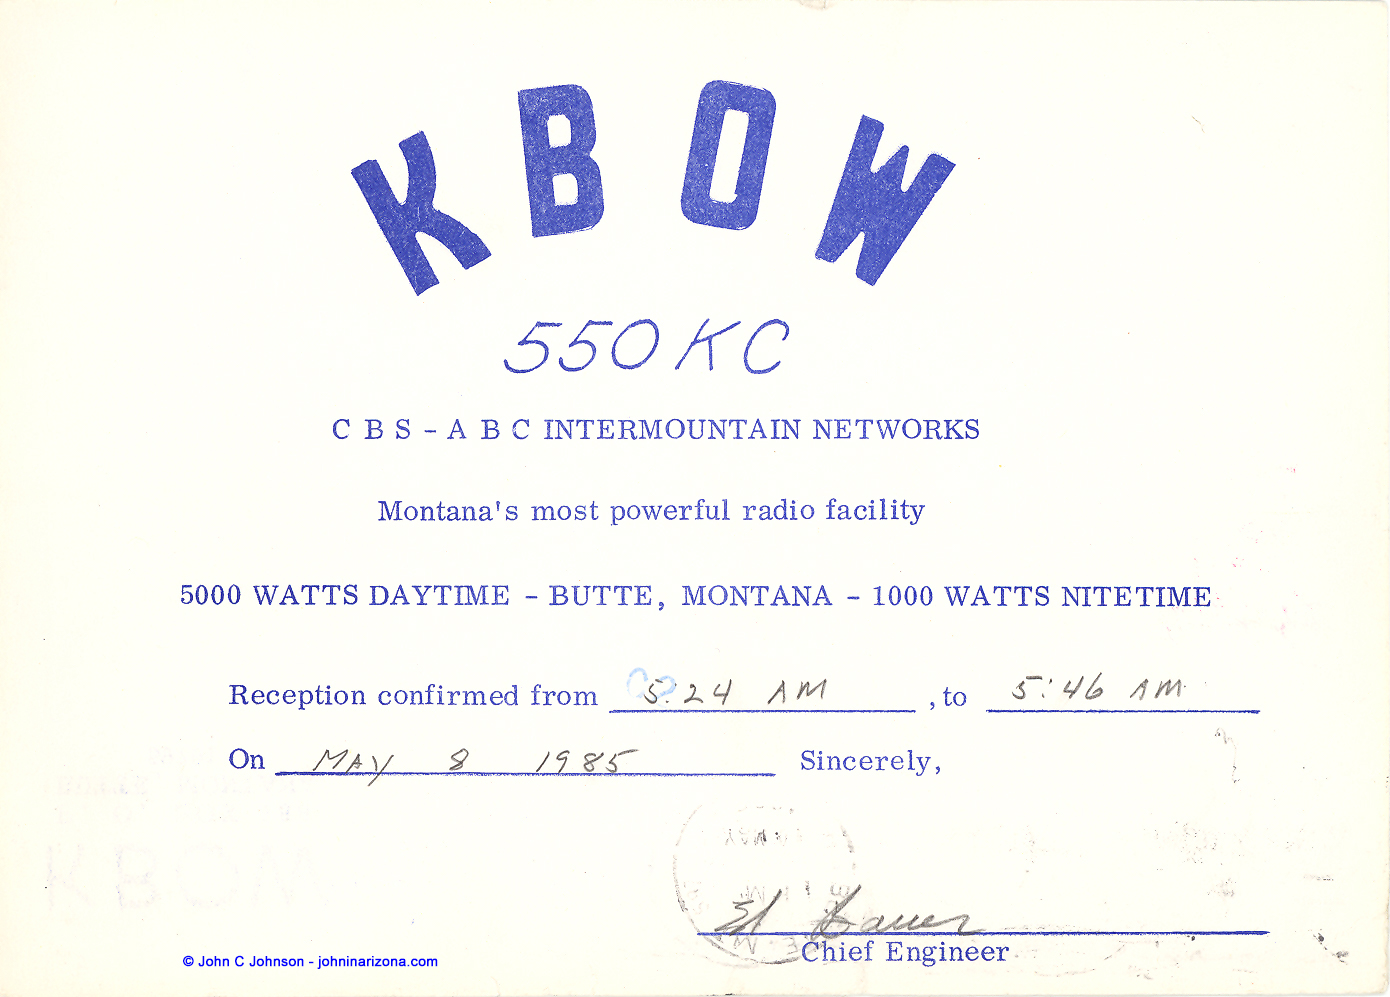 KBOW Radio 550 Butte, Montana